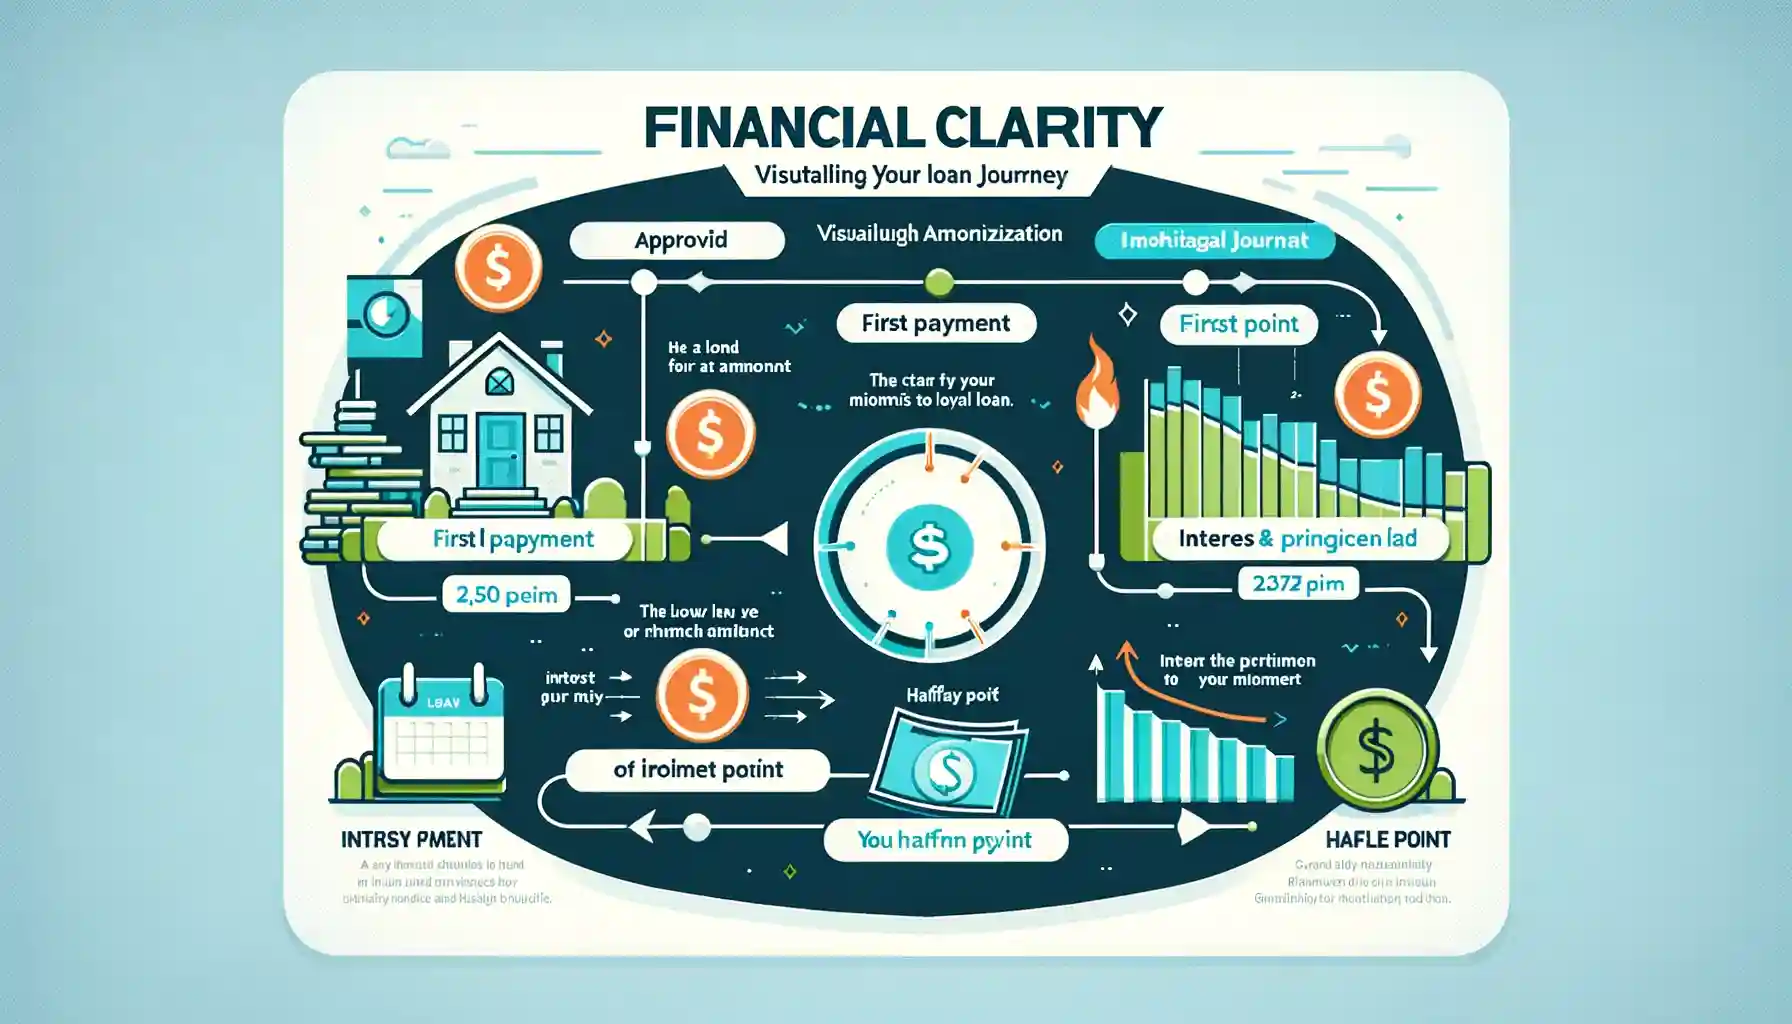 Financial Clarity